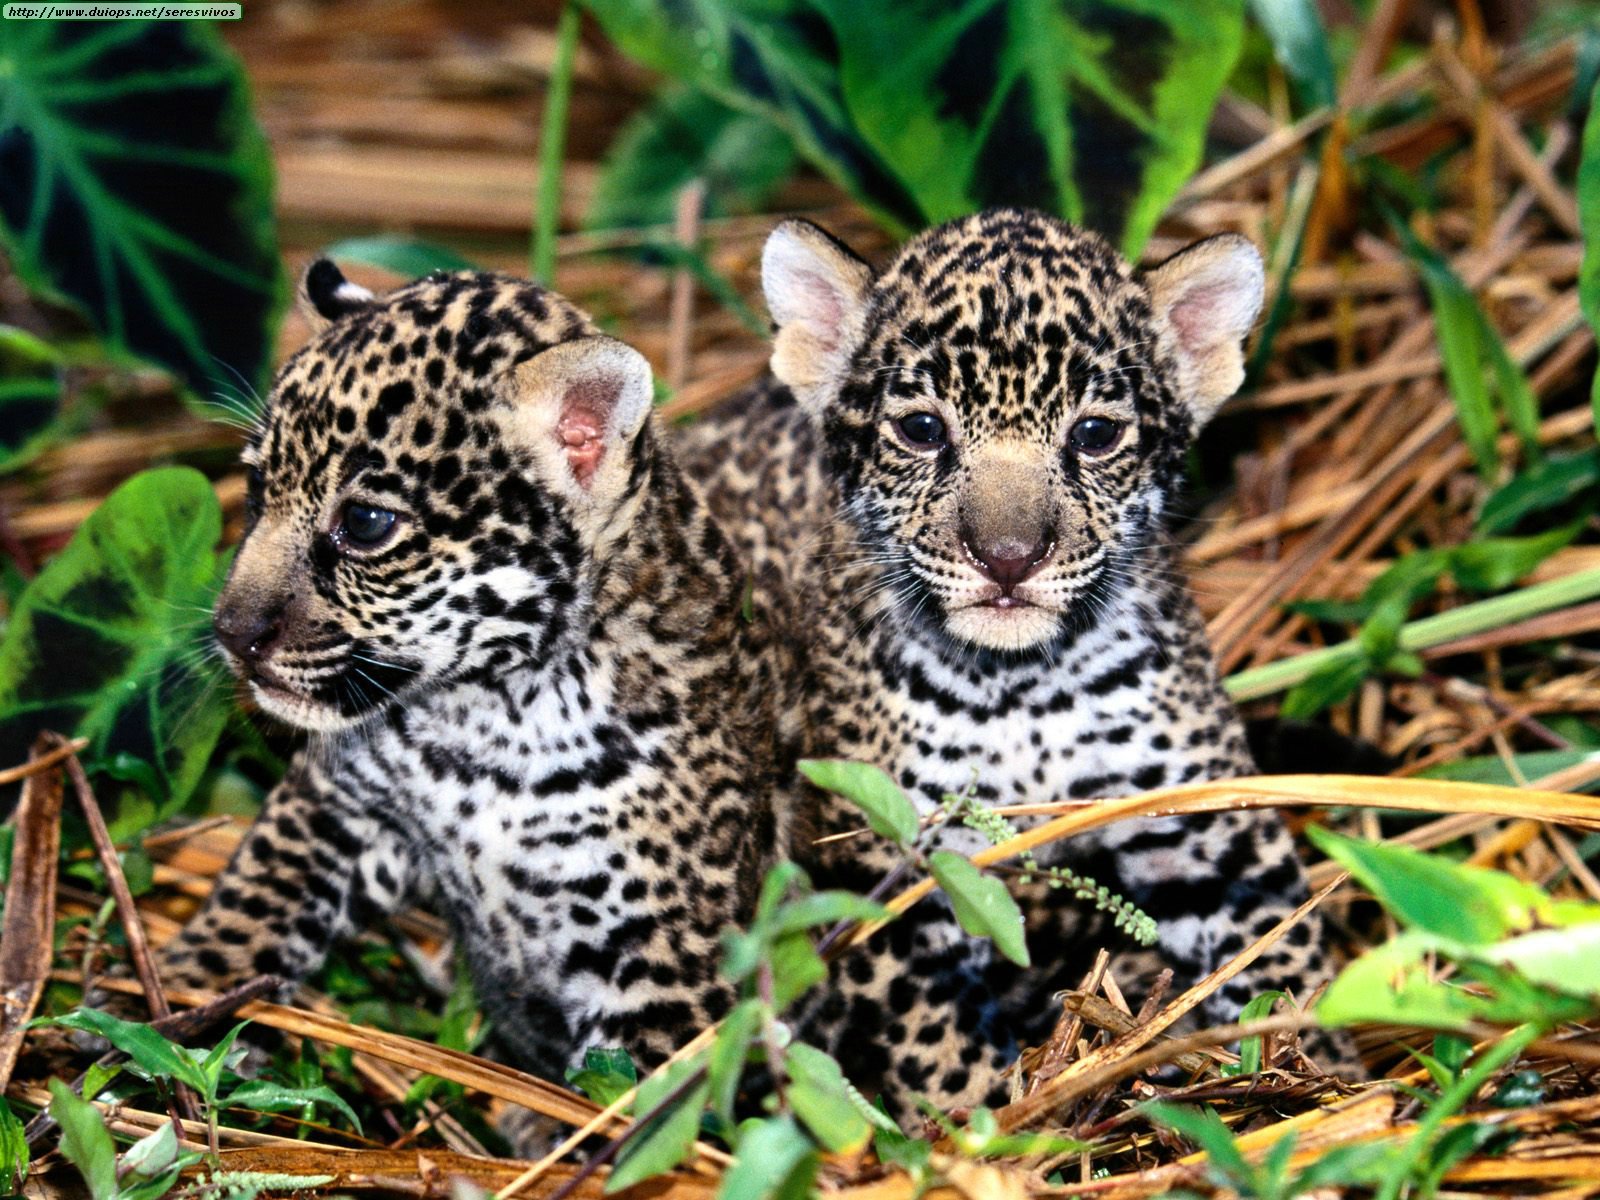 Leopards, cheetahs and jaguars photos (II)